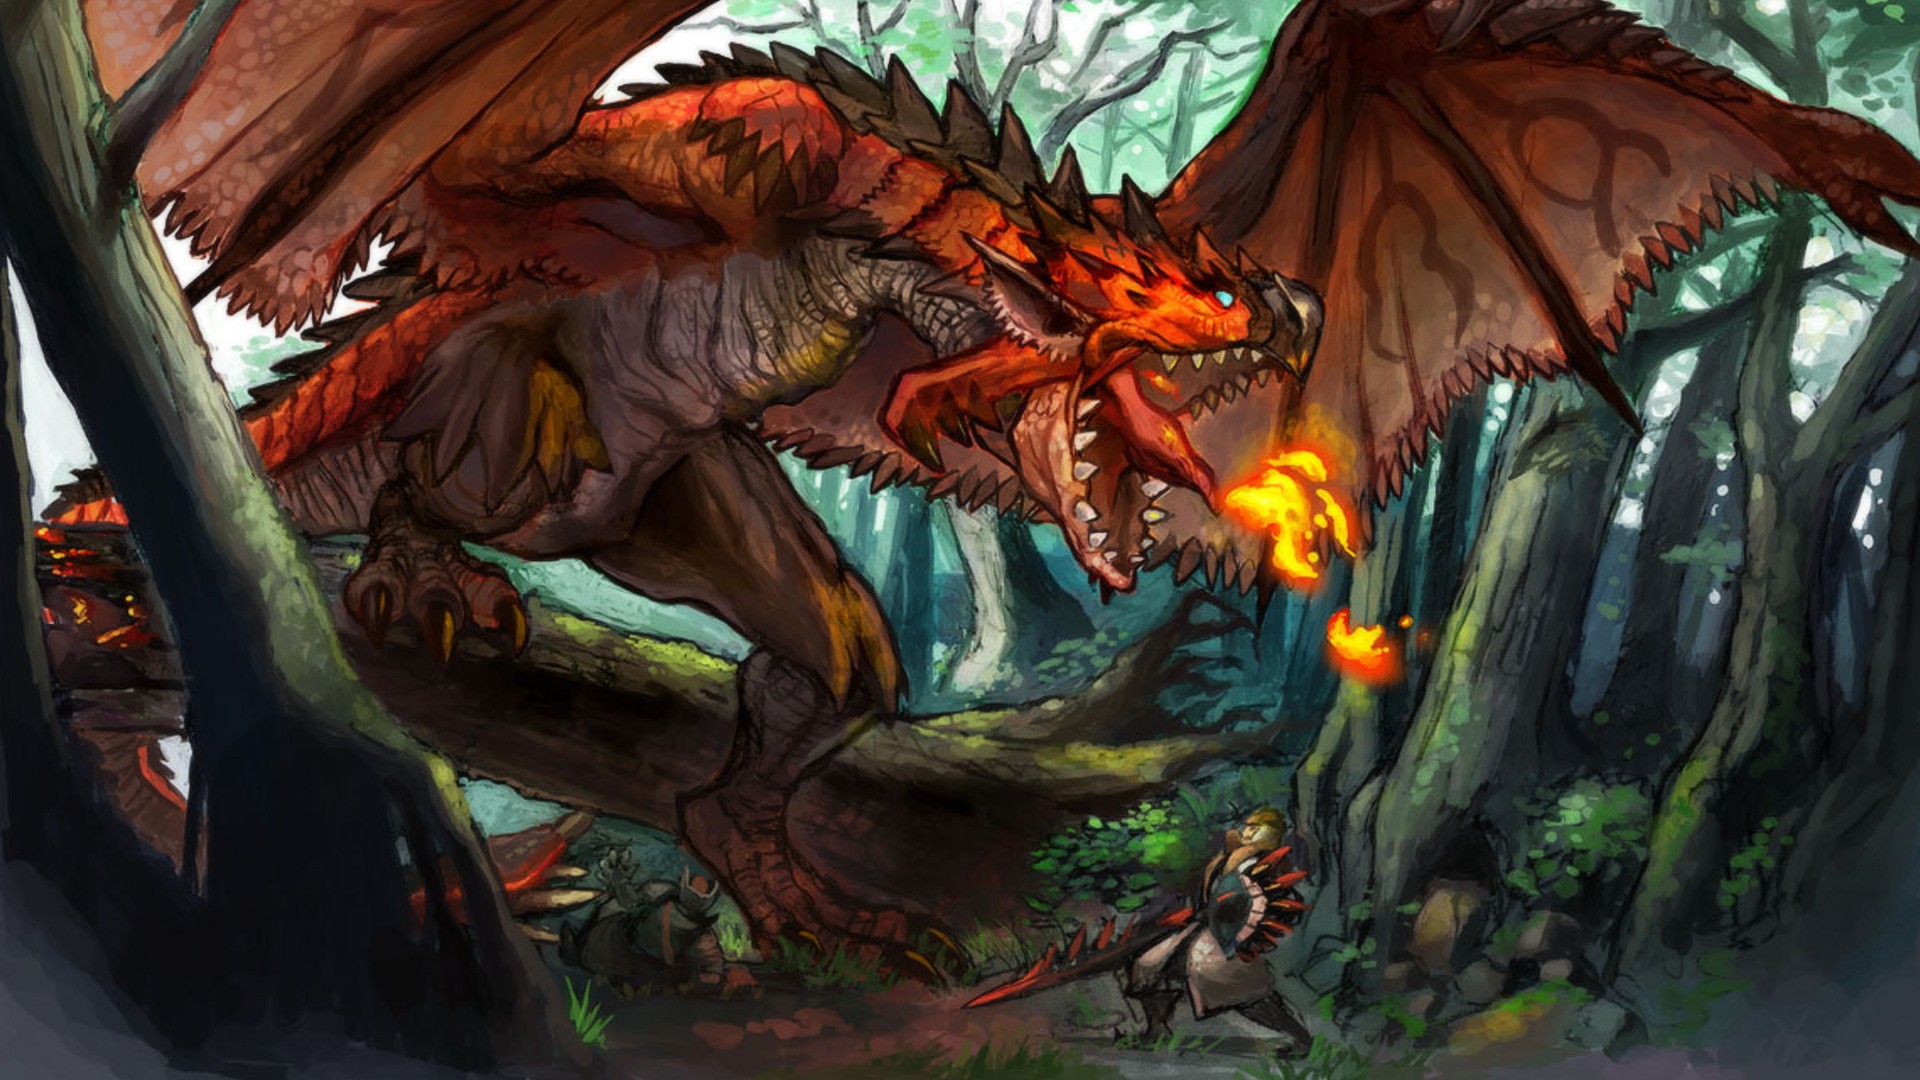 General 1920x1080 fantasy art dragon warrior video games Monster Hunter video game art creature Rathalos